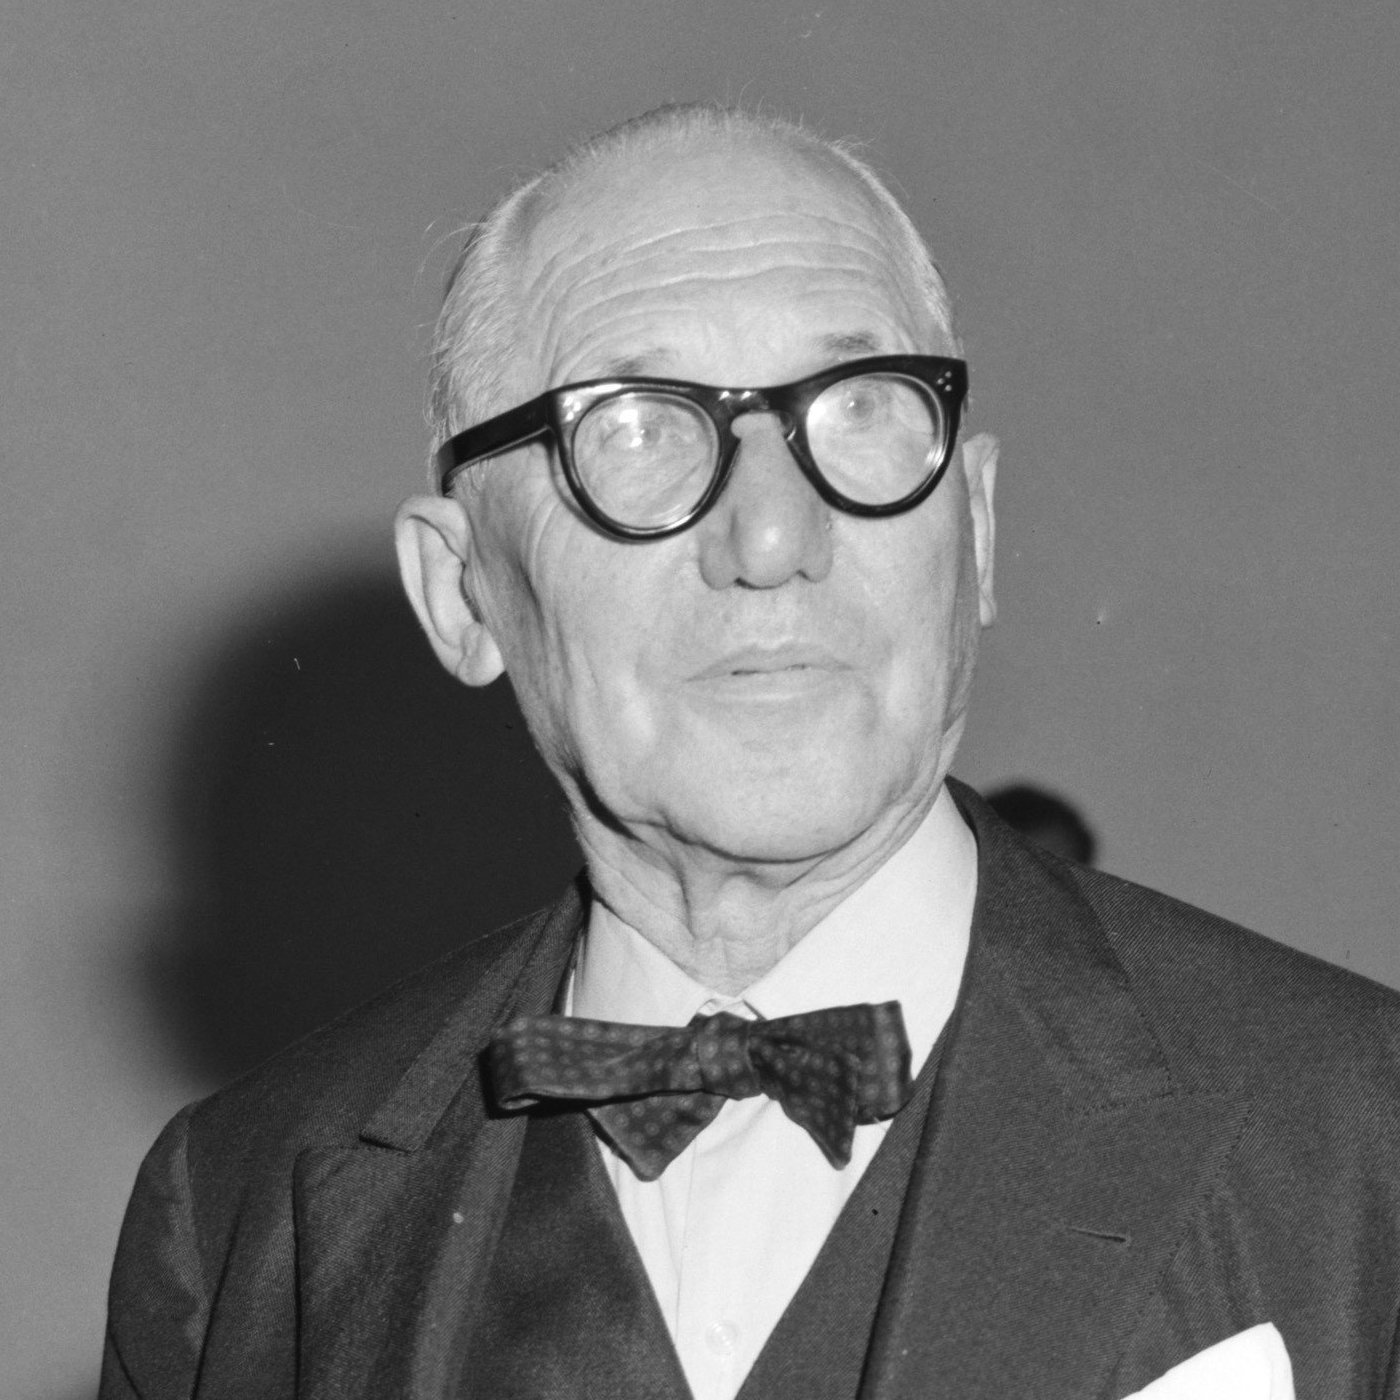 Le Corbusier in 1964